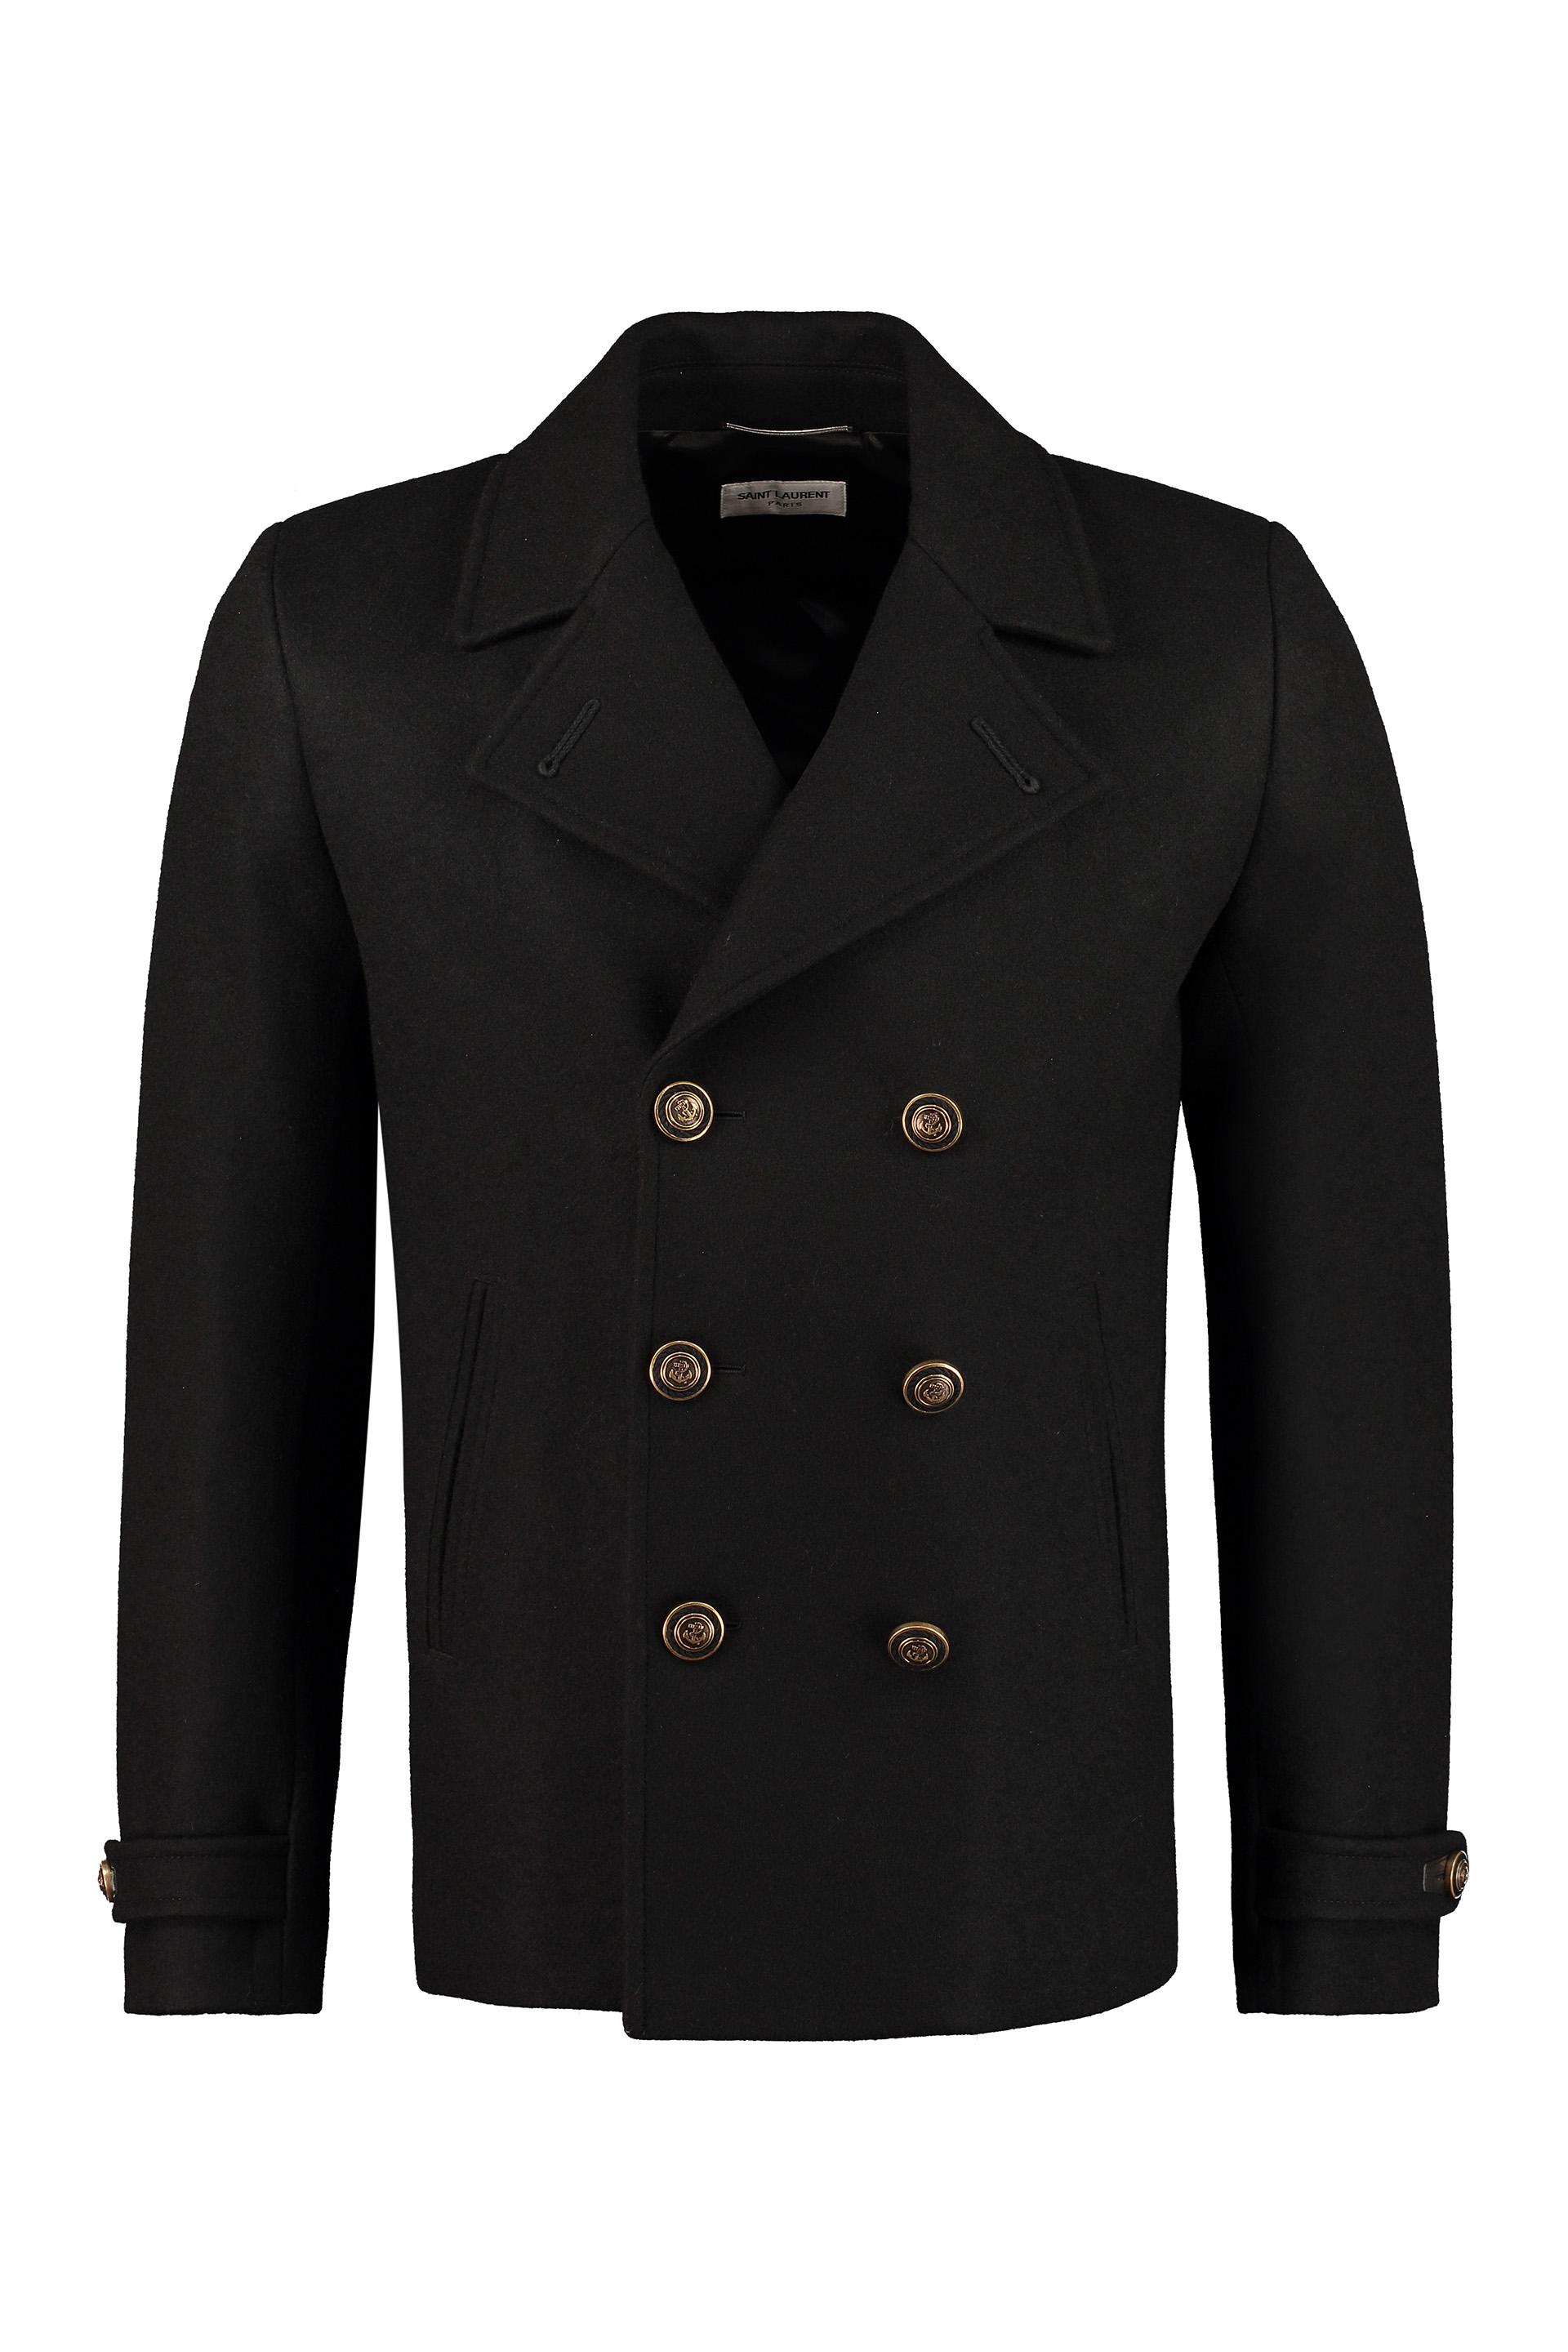 Saint Laurent Double-breasted Wool Coat in Black for Men - Lyst